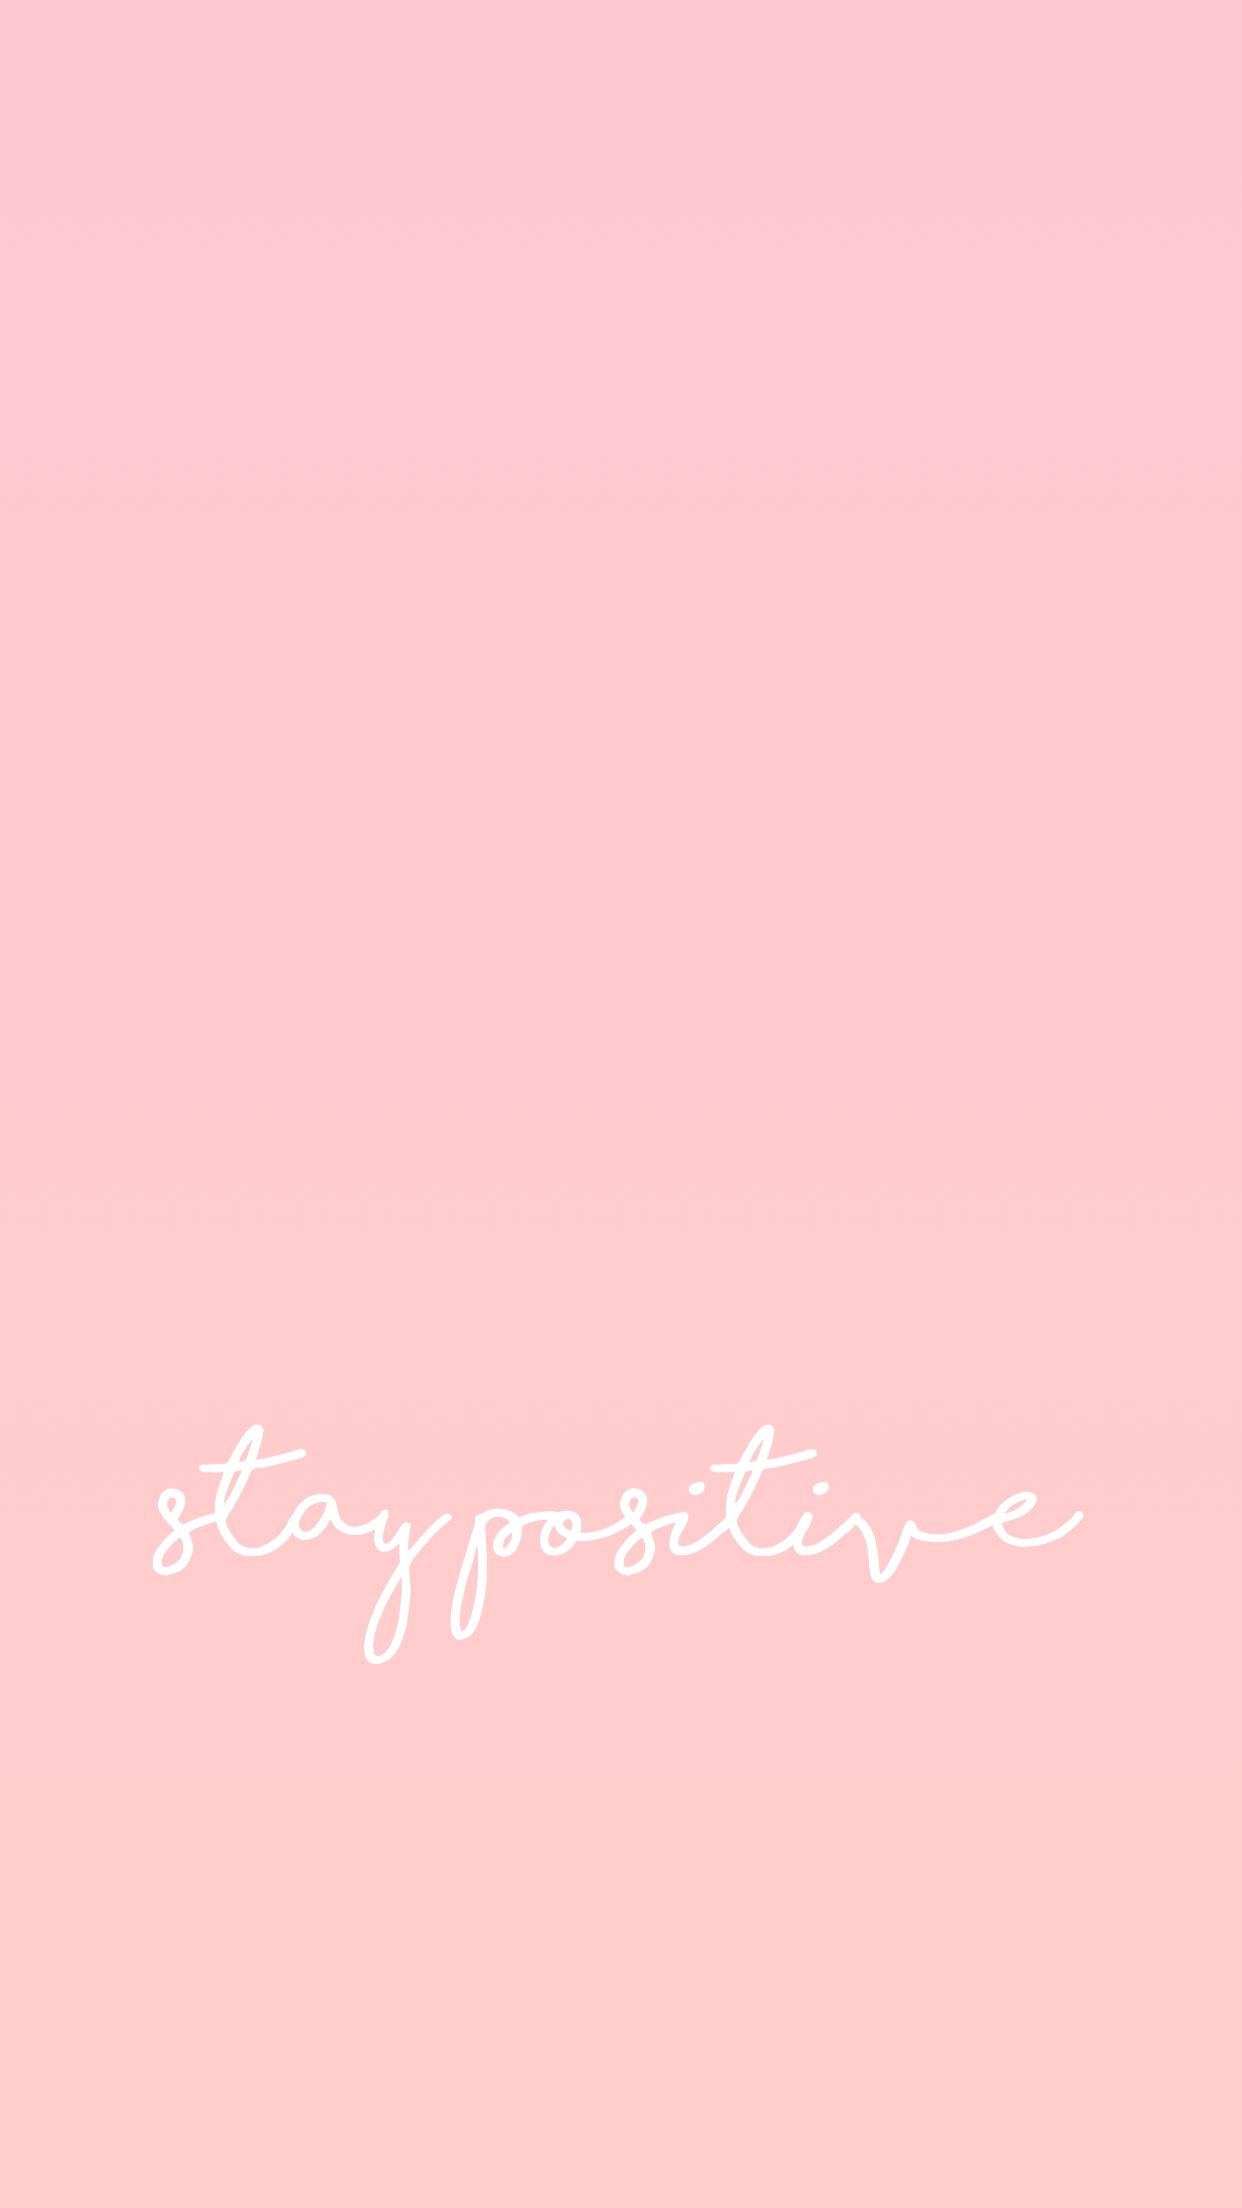 iPhone wallpaper positive // #iphonewallpaper #wallpaper #stay # positive #quote #pink. Wallpaper iphone quotes, Positive wallpaper, iPad wallpaper quotes